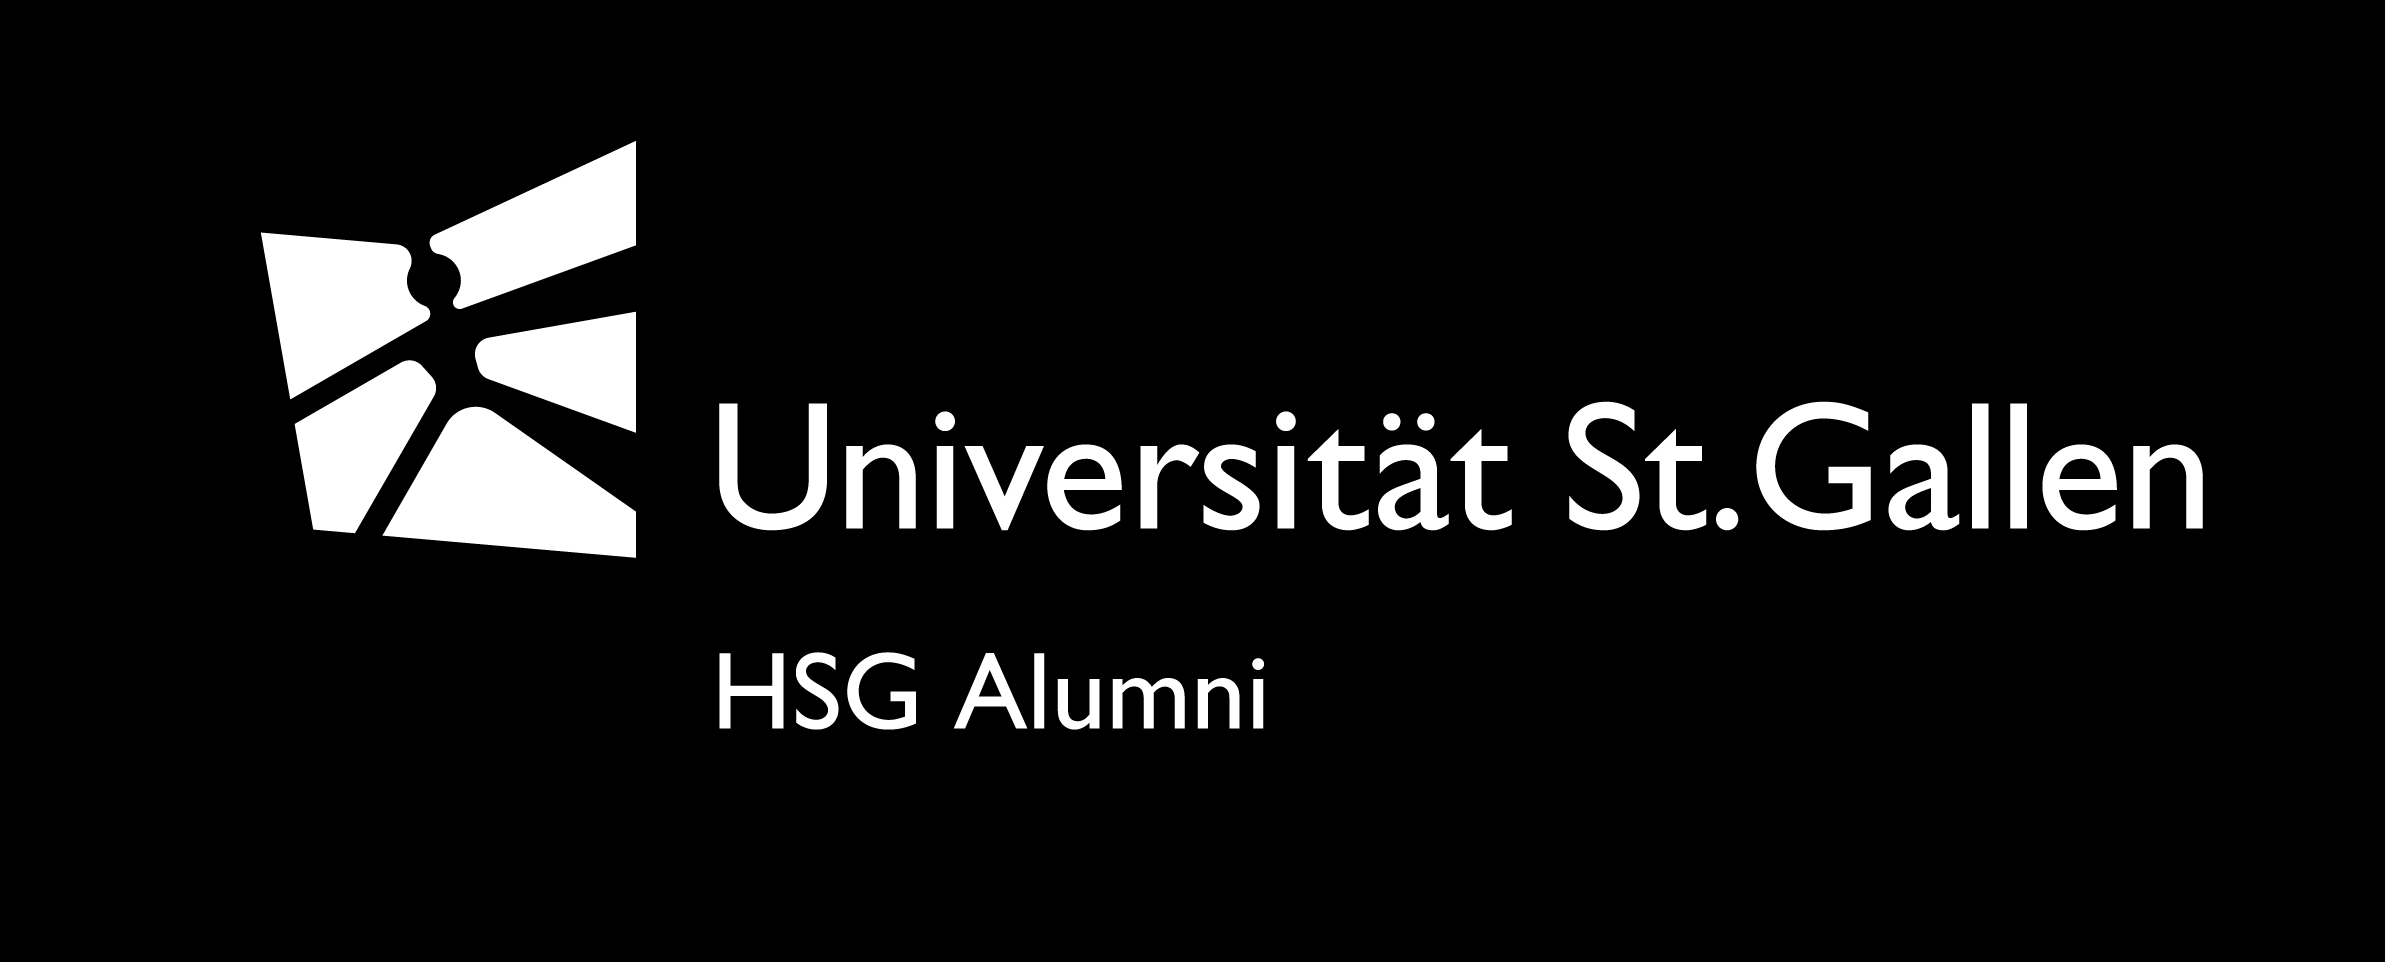 HSG Alumni